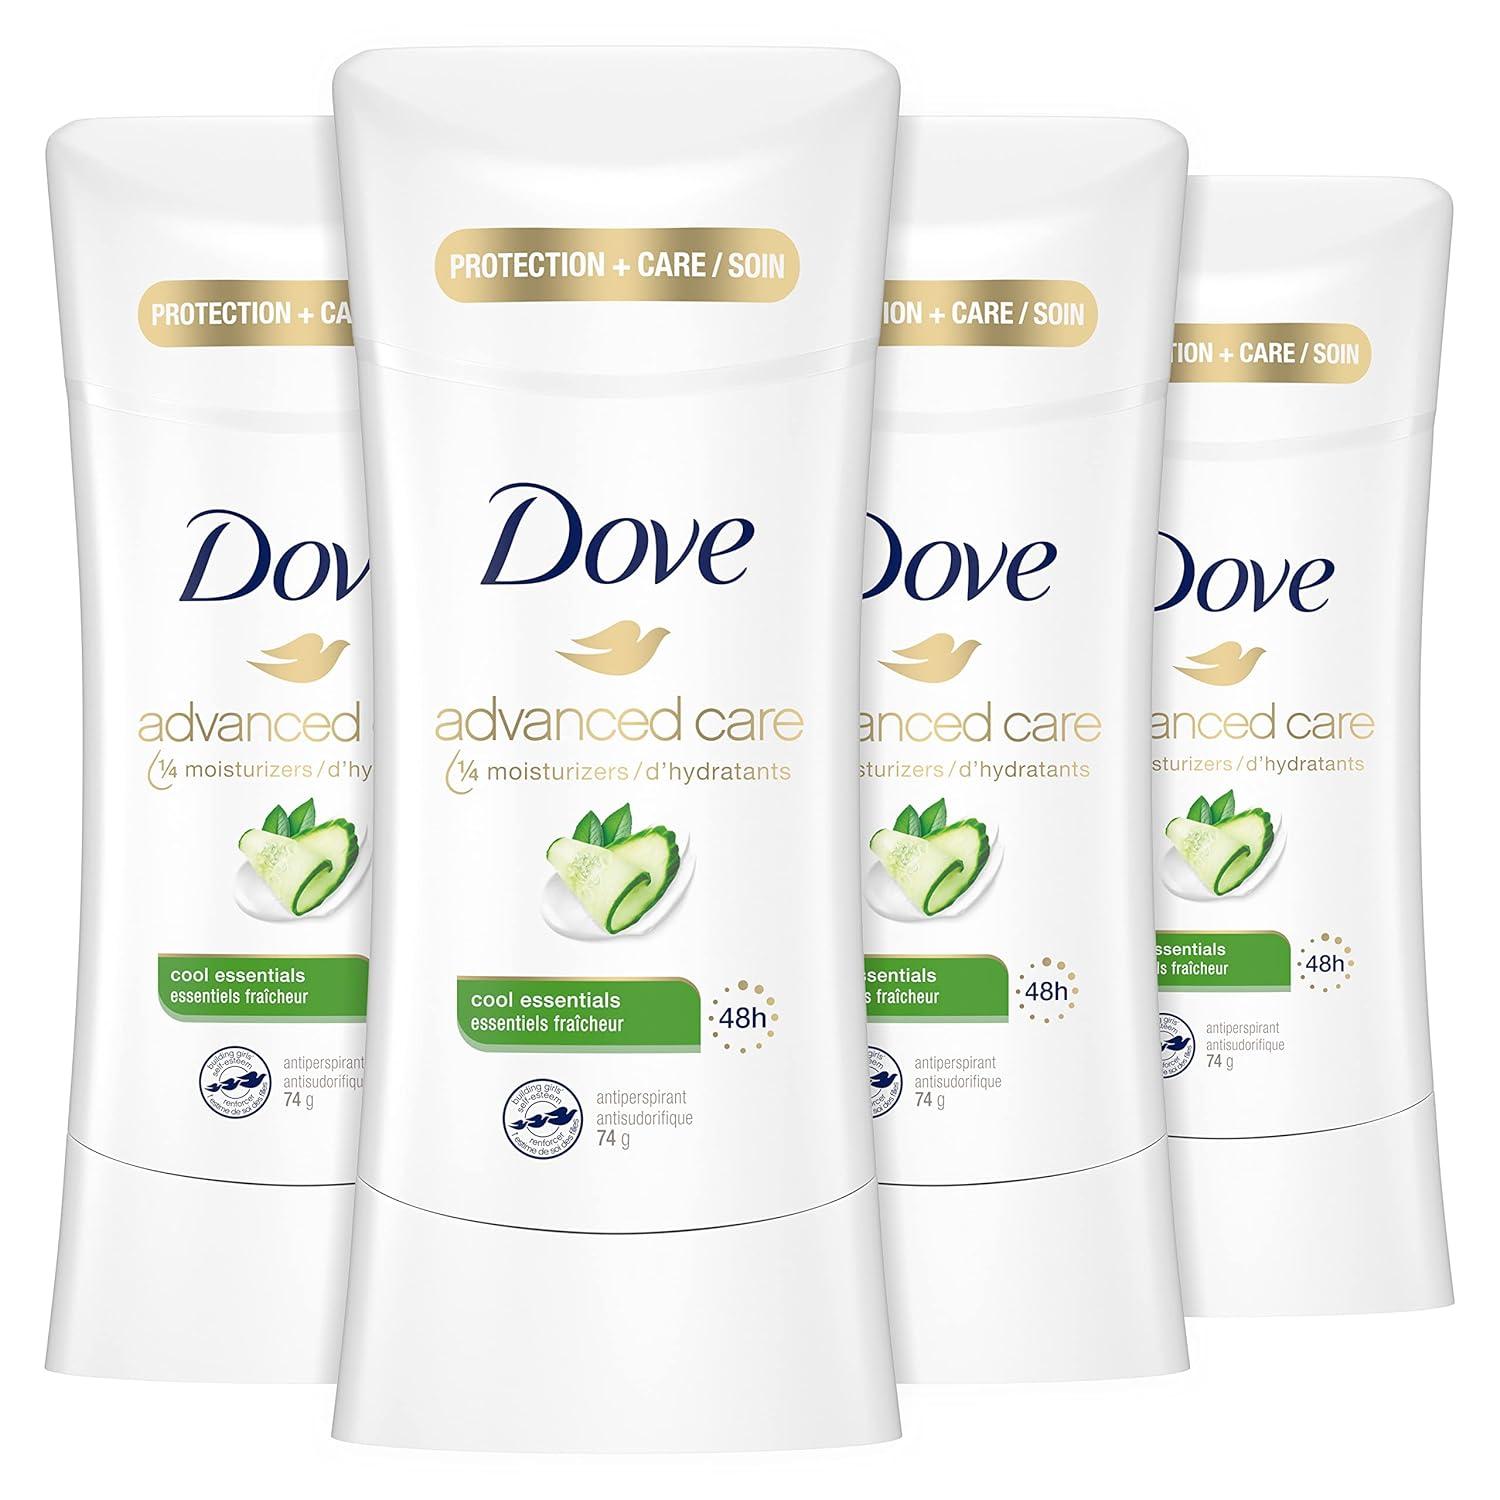 Dove Advanced Care Antiperspirant Cool Essentials Deodorant 4 Pack for $9.73